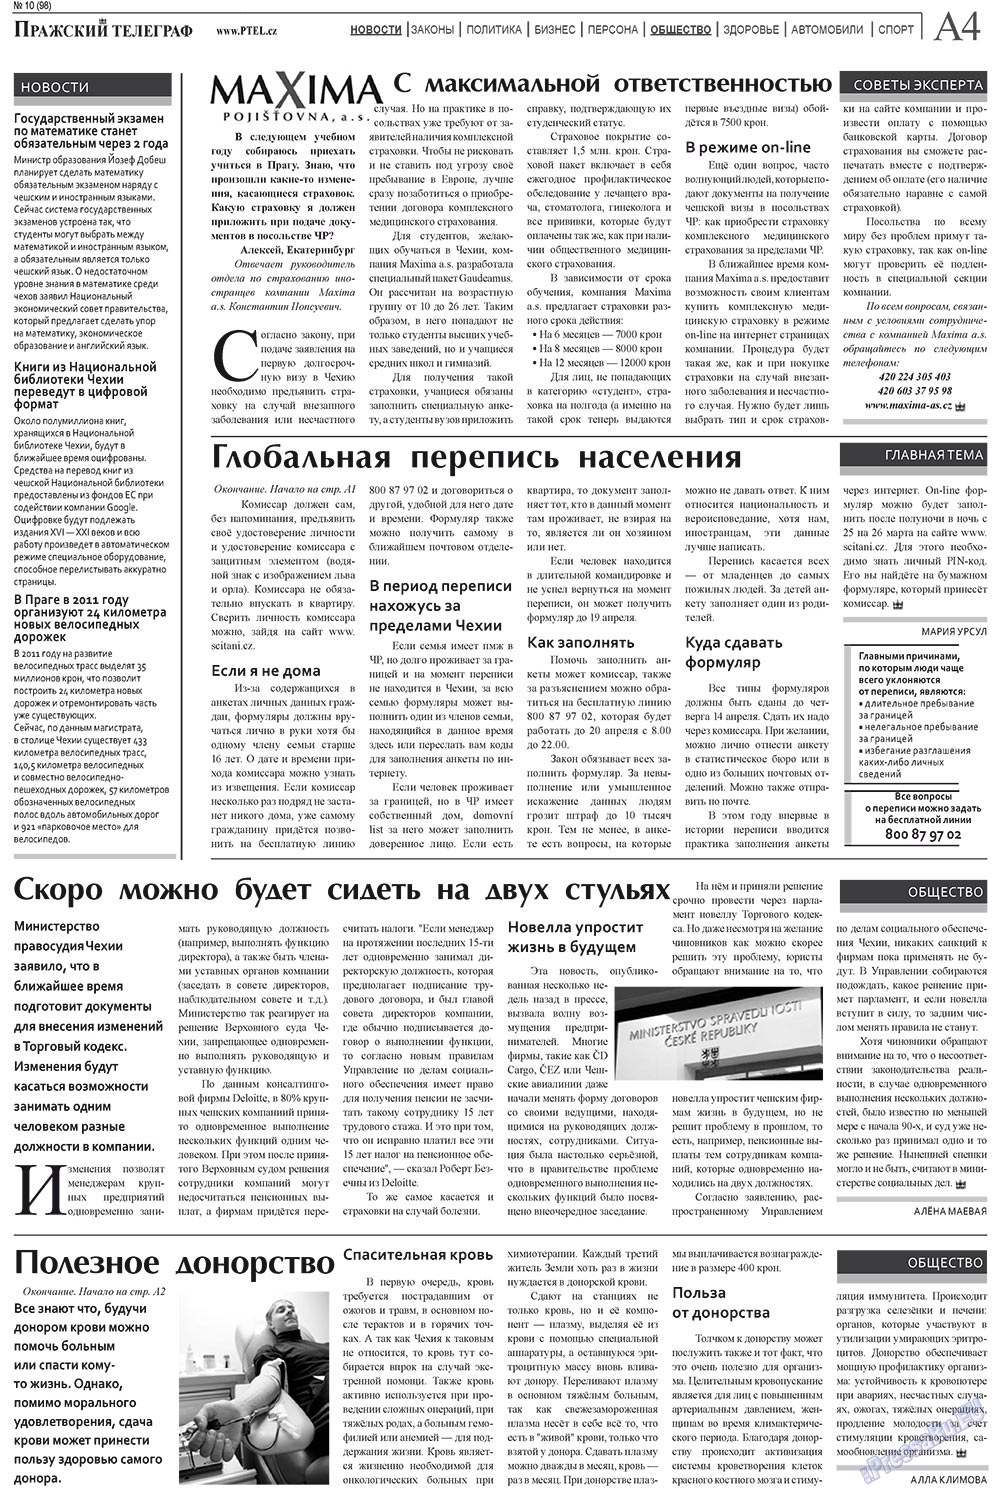 Пражский телеграф, газета. 2011 №10 стр.4